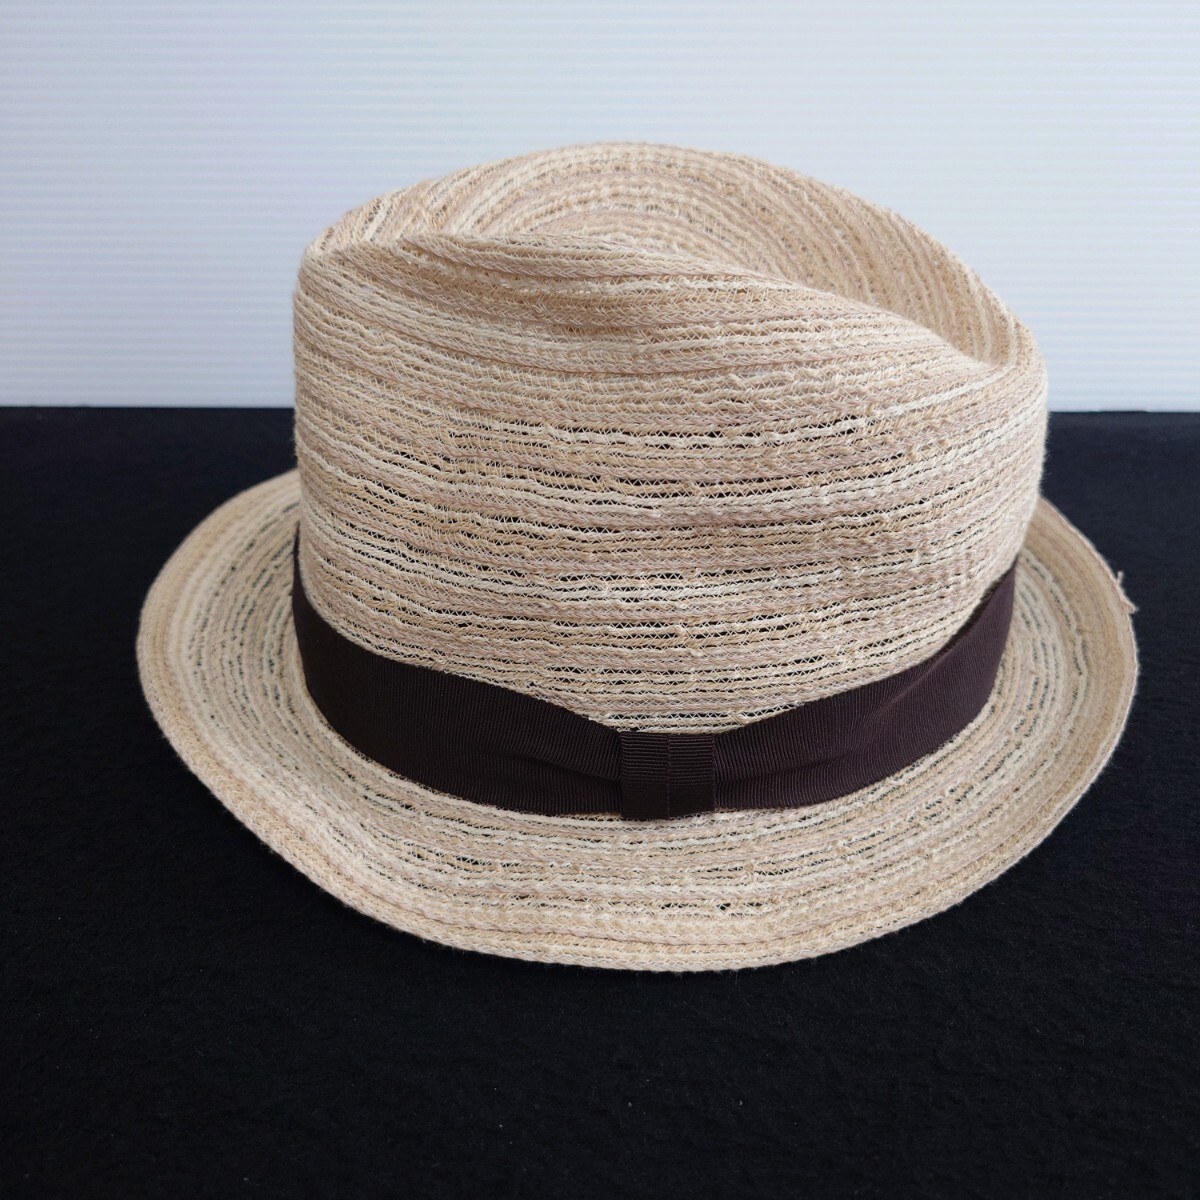 Zukin 日本製 中折れハット 帽子 Lサイズ レディース ベージュ_画像3